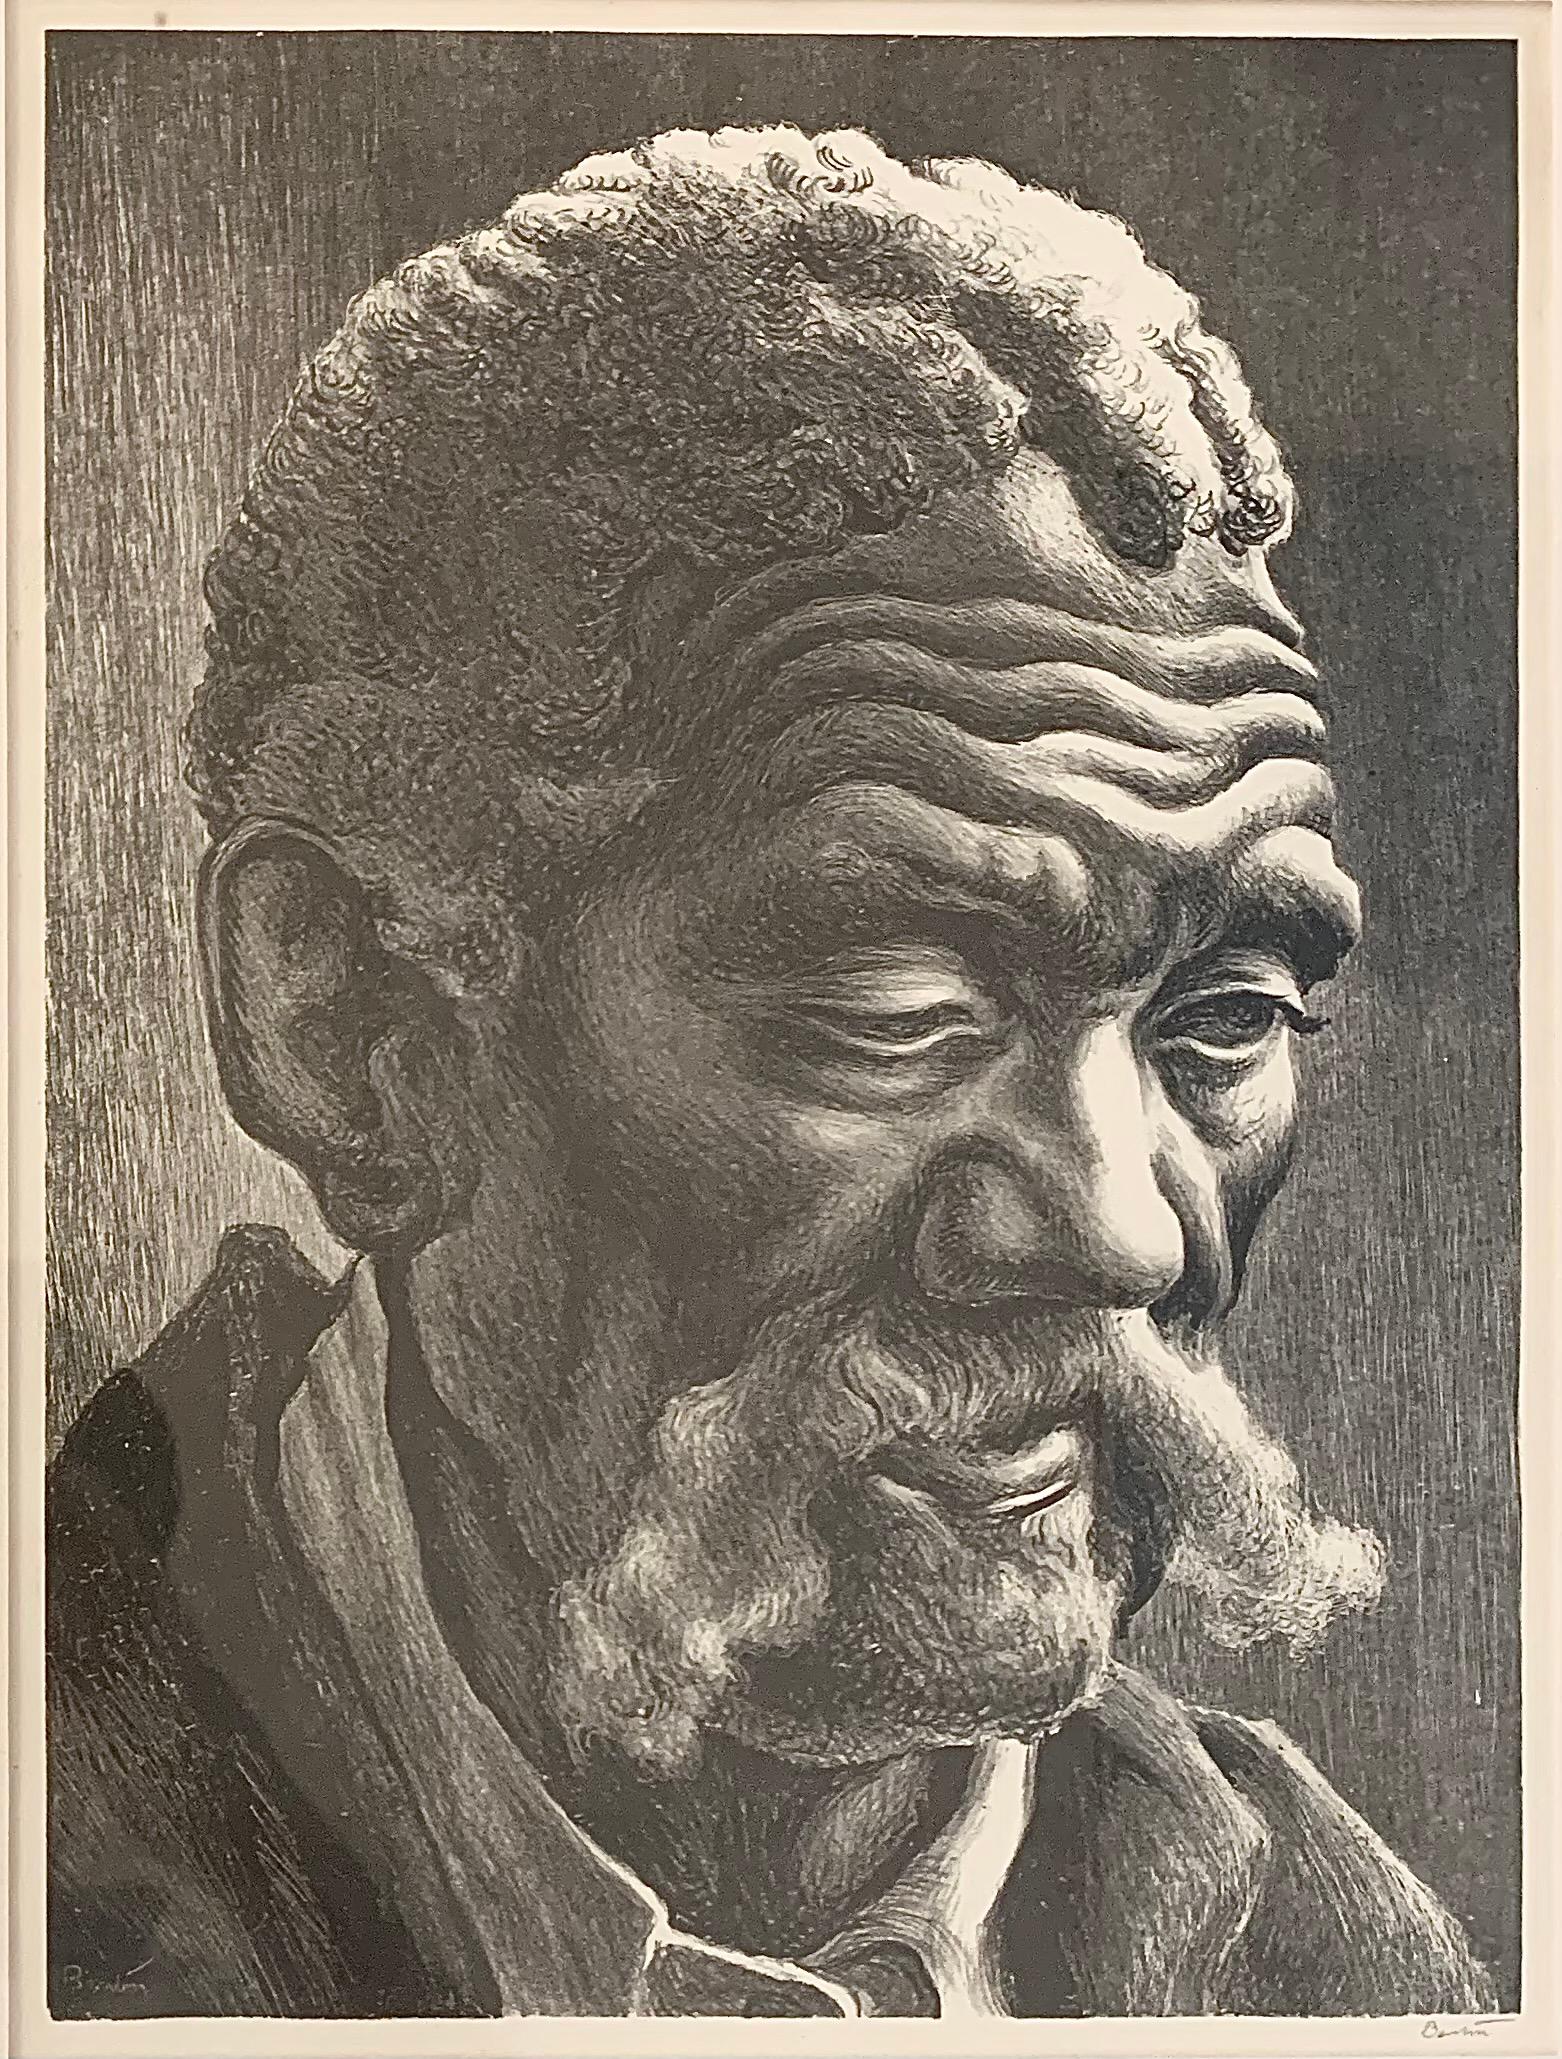 Thomas Hart Benton Portrait Print - Aaron, American Social Realist Lithograph